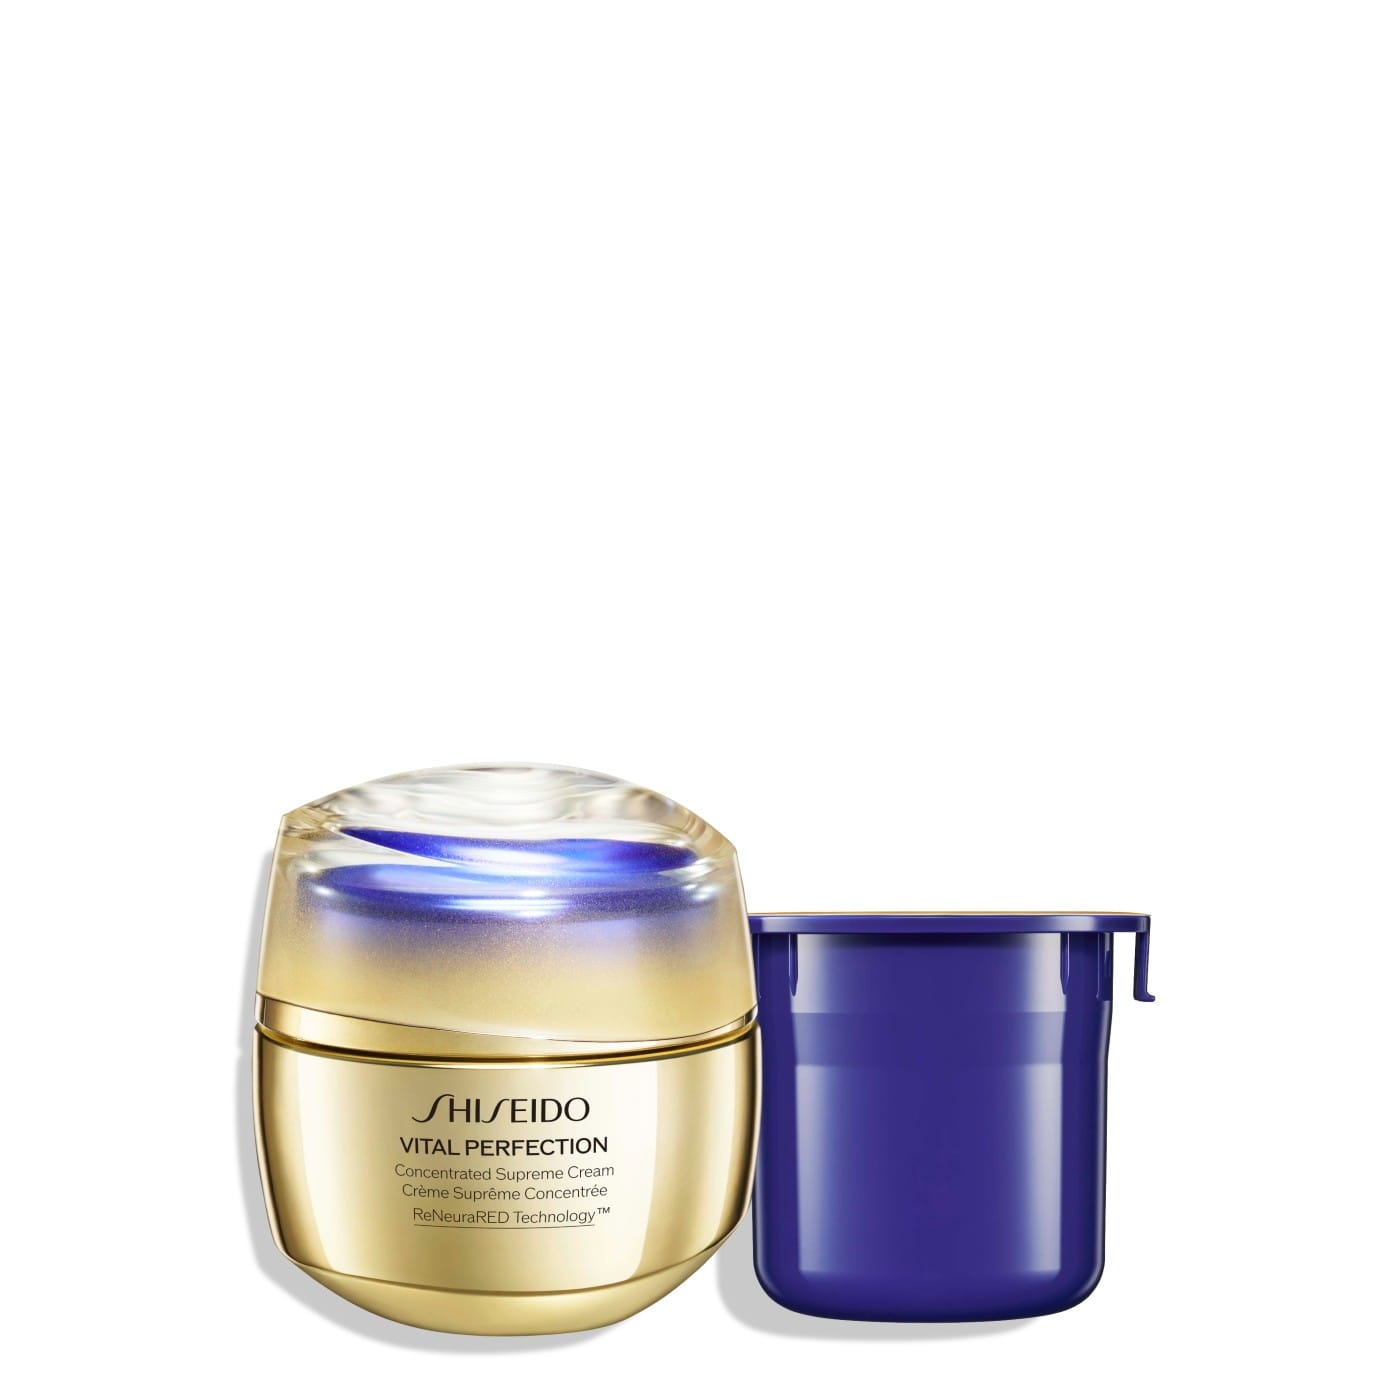 Shiseido-Concentrated Supreme Duo Cream